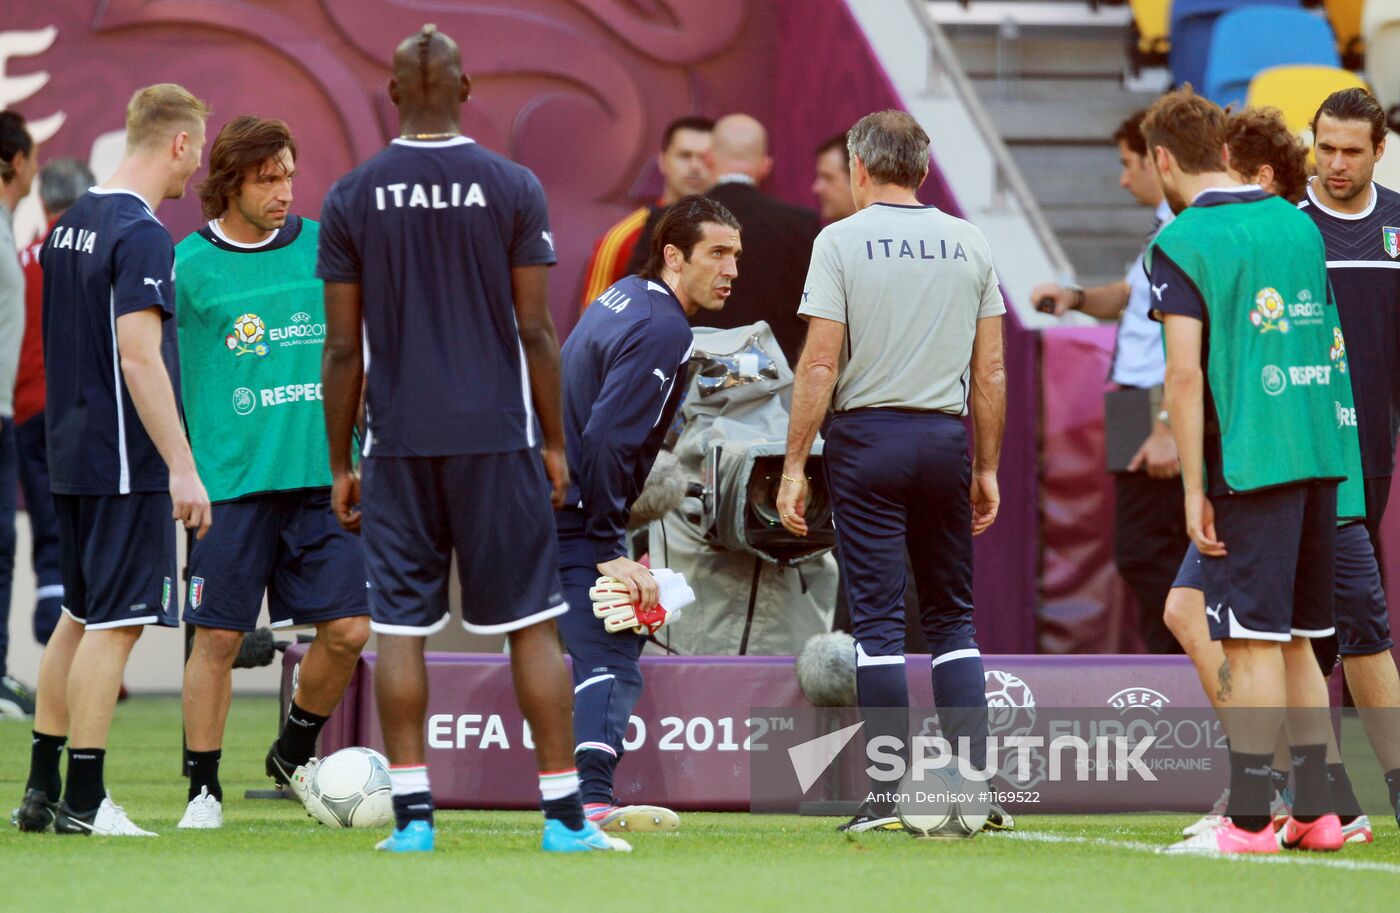 UEFA Euro 2012. Training of Italian and German teams